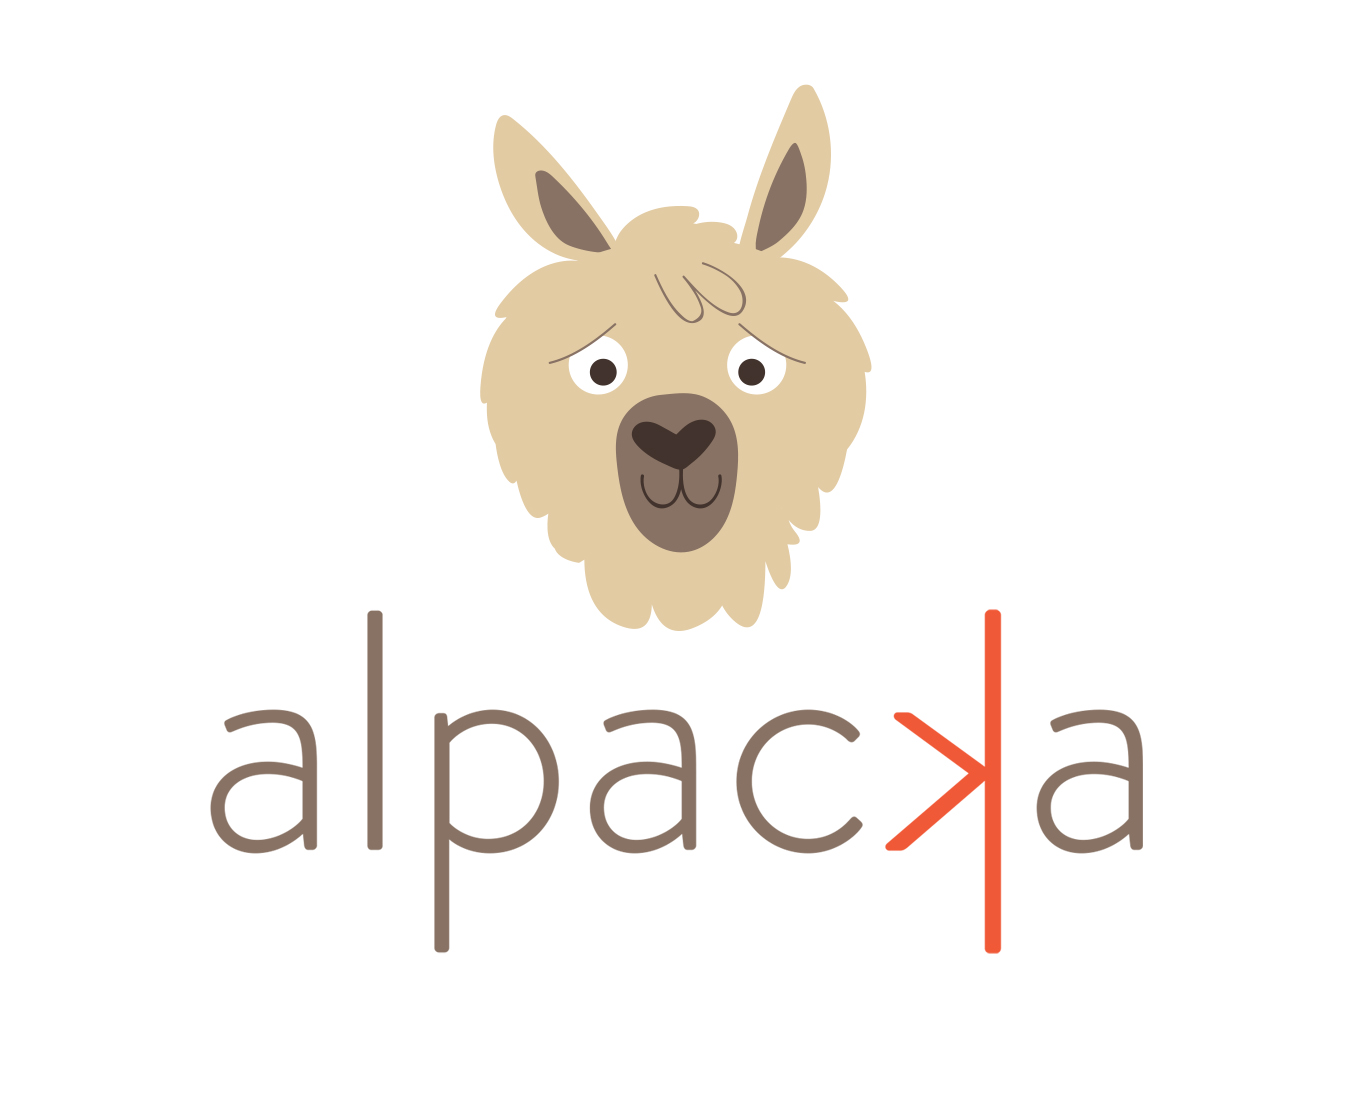 Alpacka Group